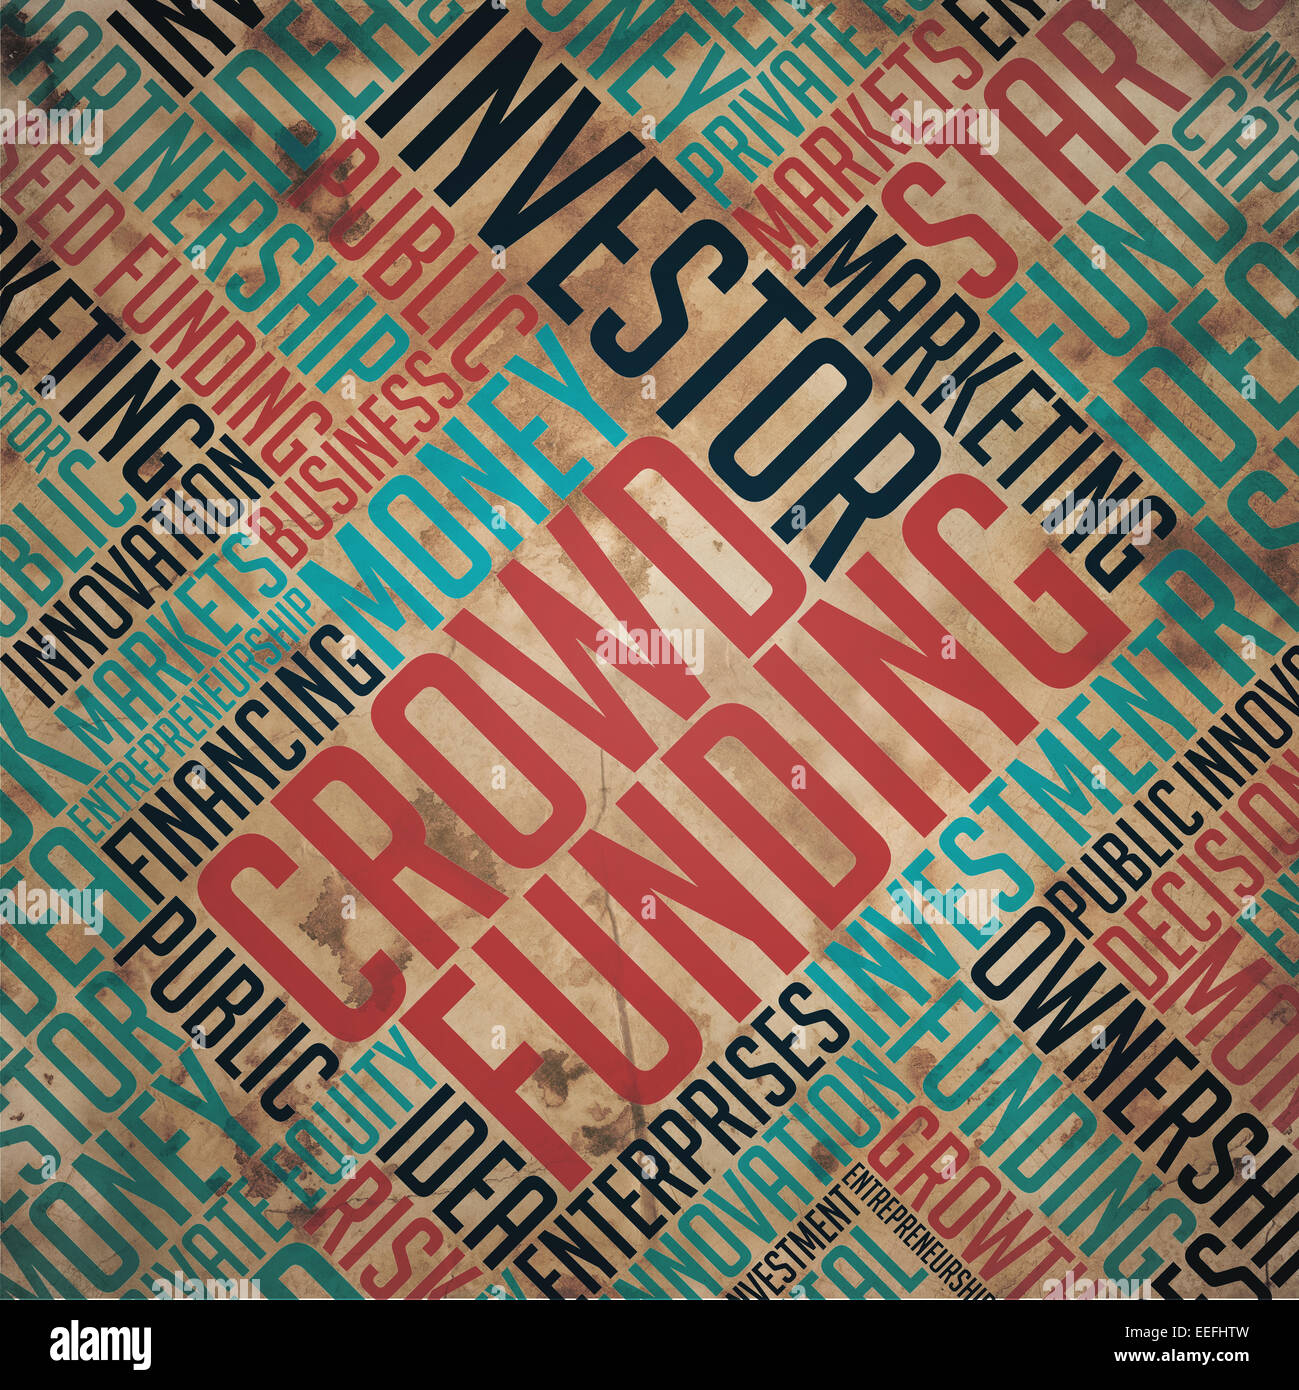 Crowd Funding - Grunge Brown Word Collage. Stock Photo